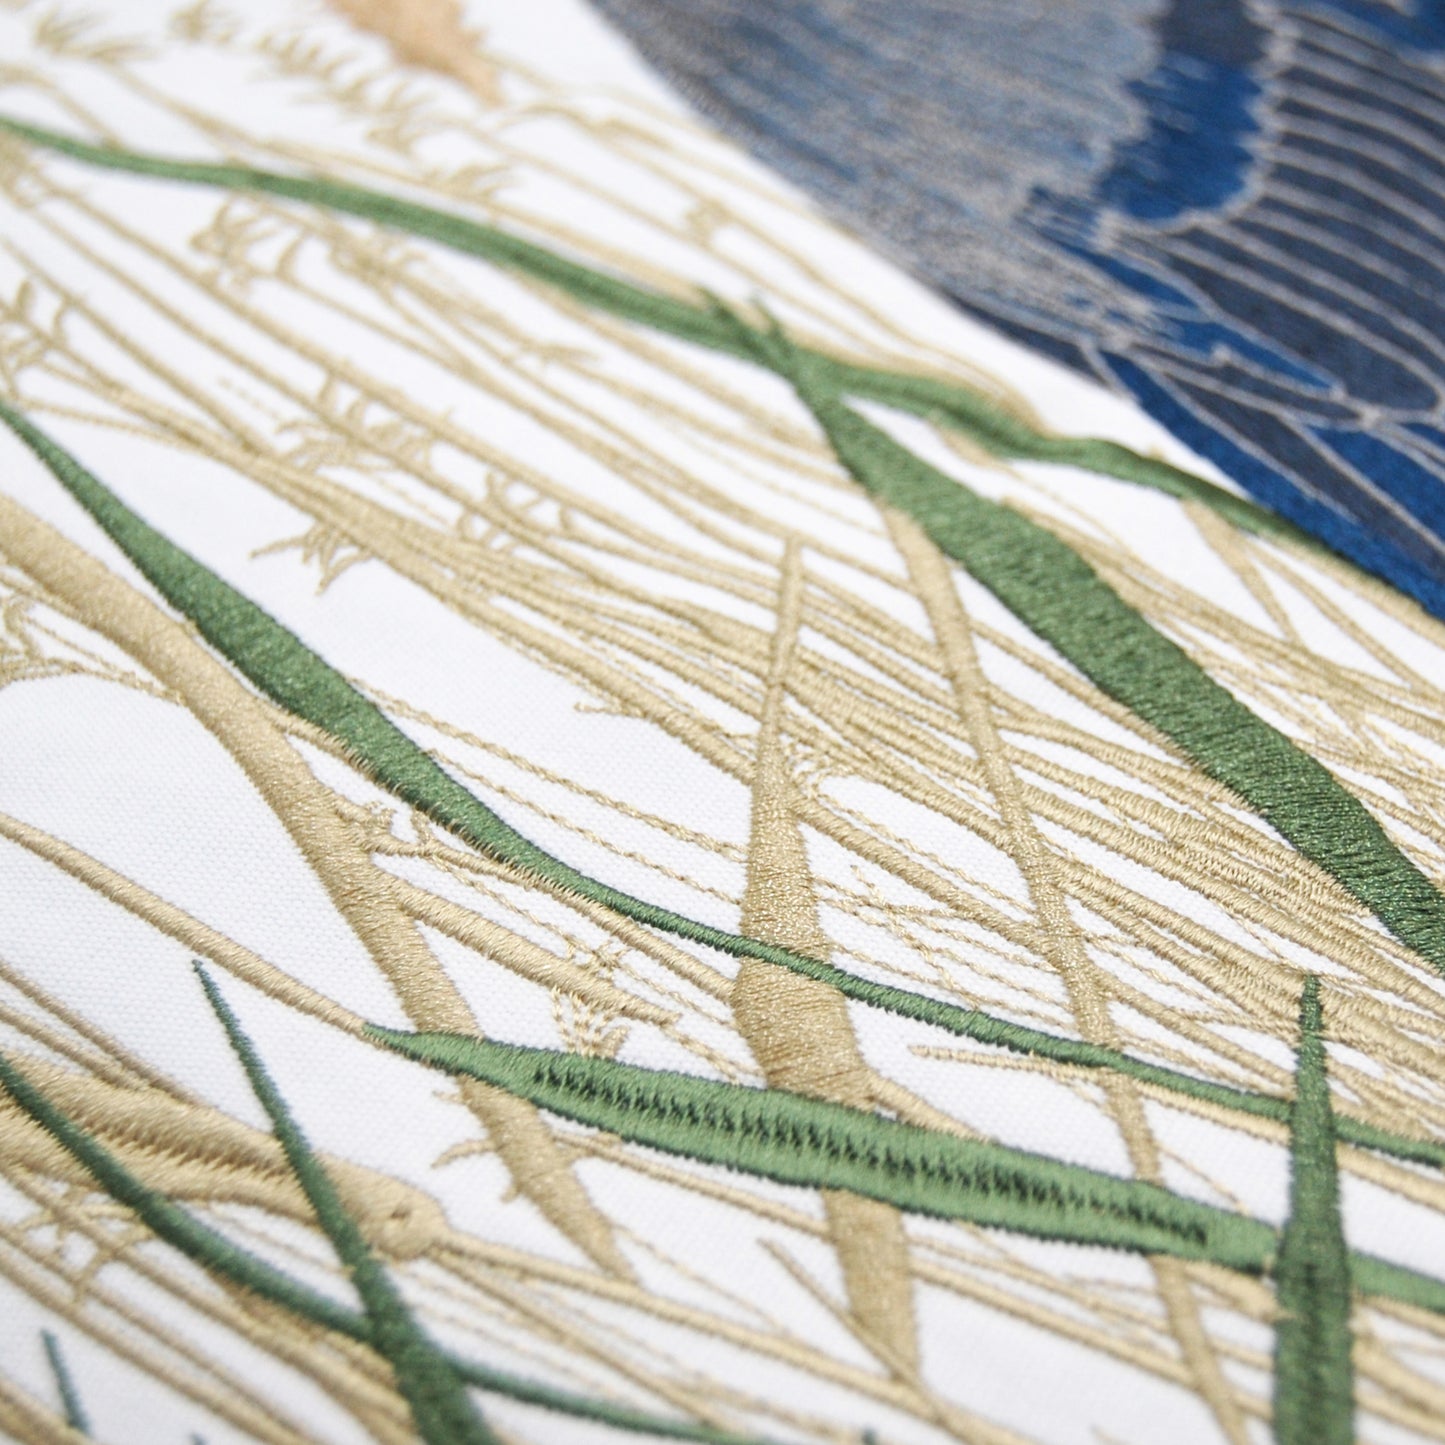 Detailed shot of the saltmarsh grass embroidery work on the Blue Heron and Saltmarsh Pillow.